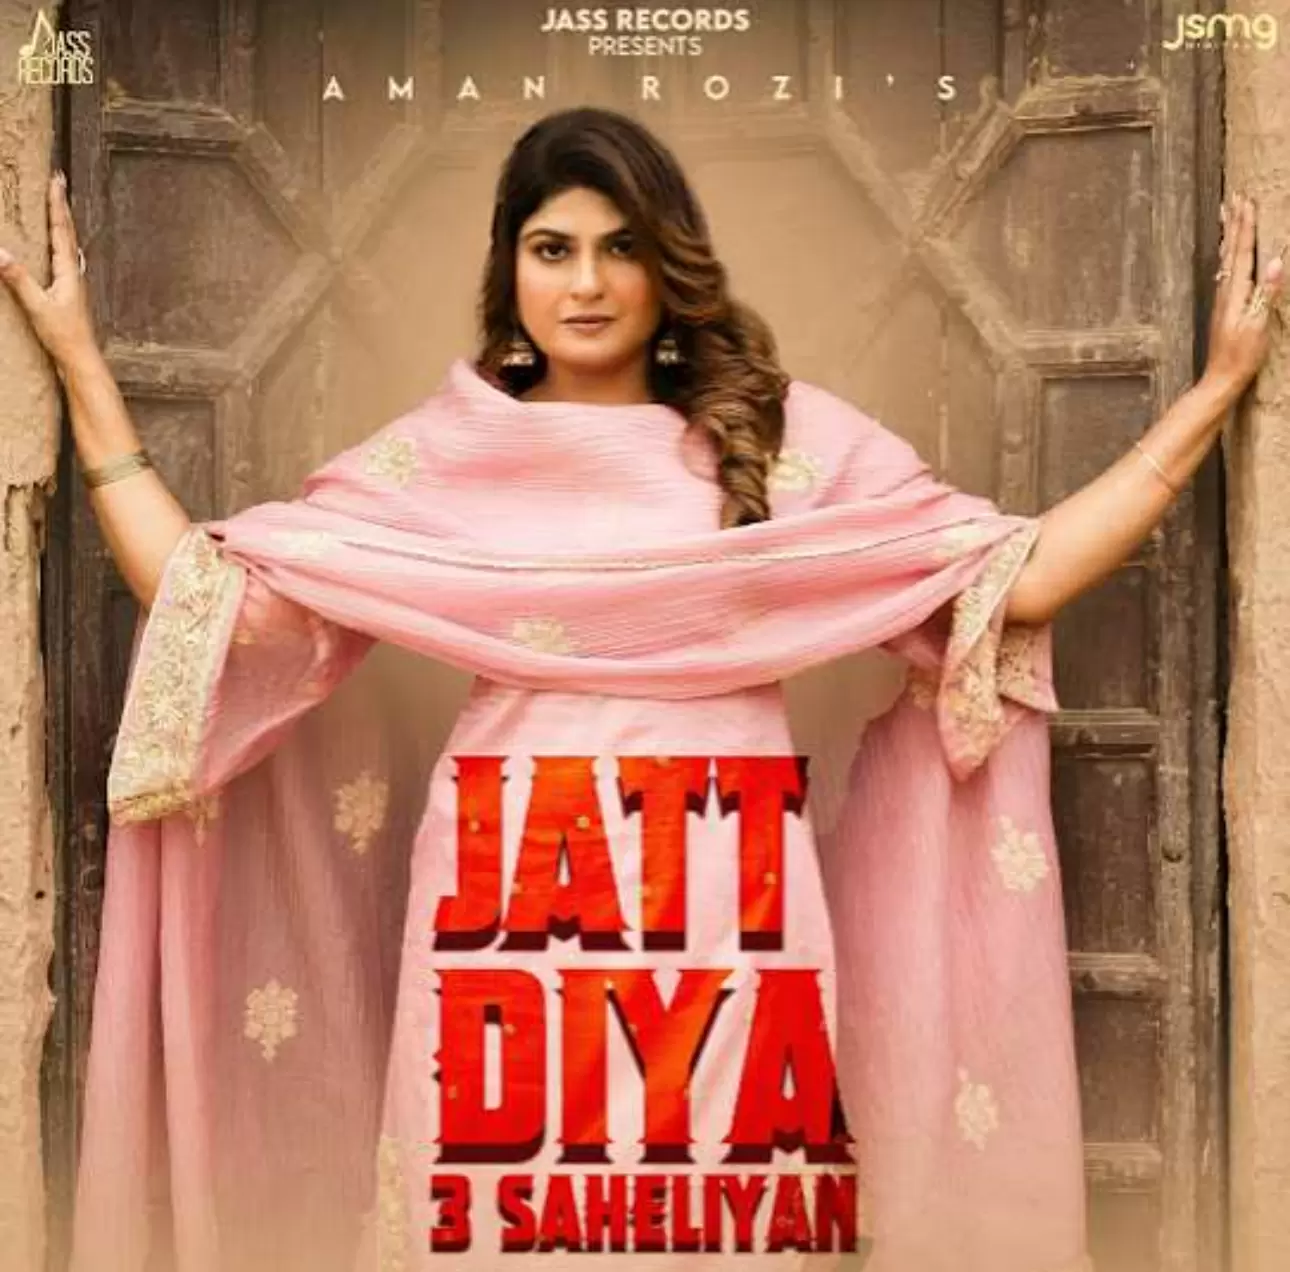 Jatt Diyan 3 Sheliaan - Single Song by Aman Rozi - Mr-Punjab